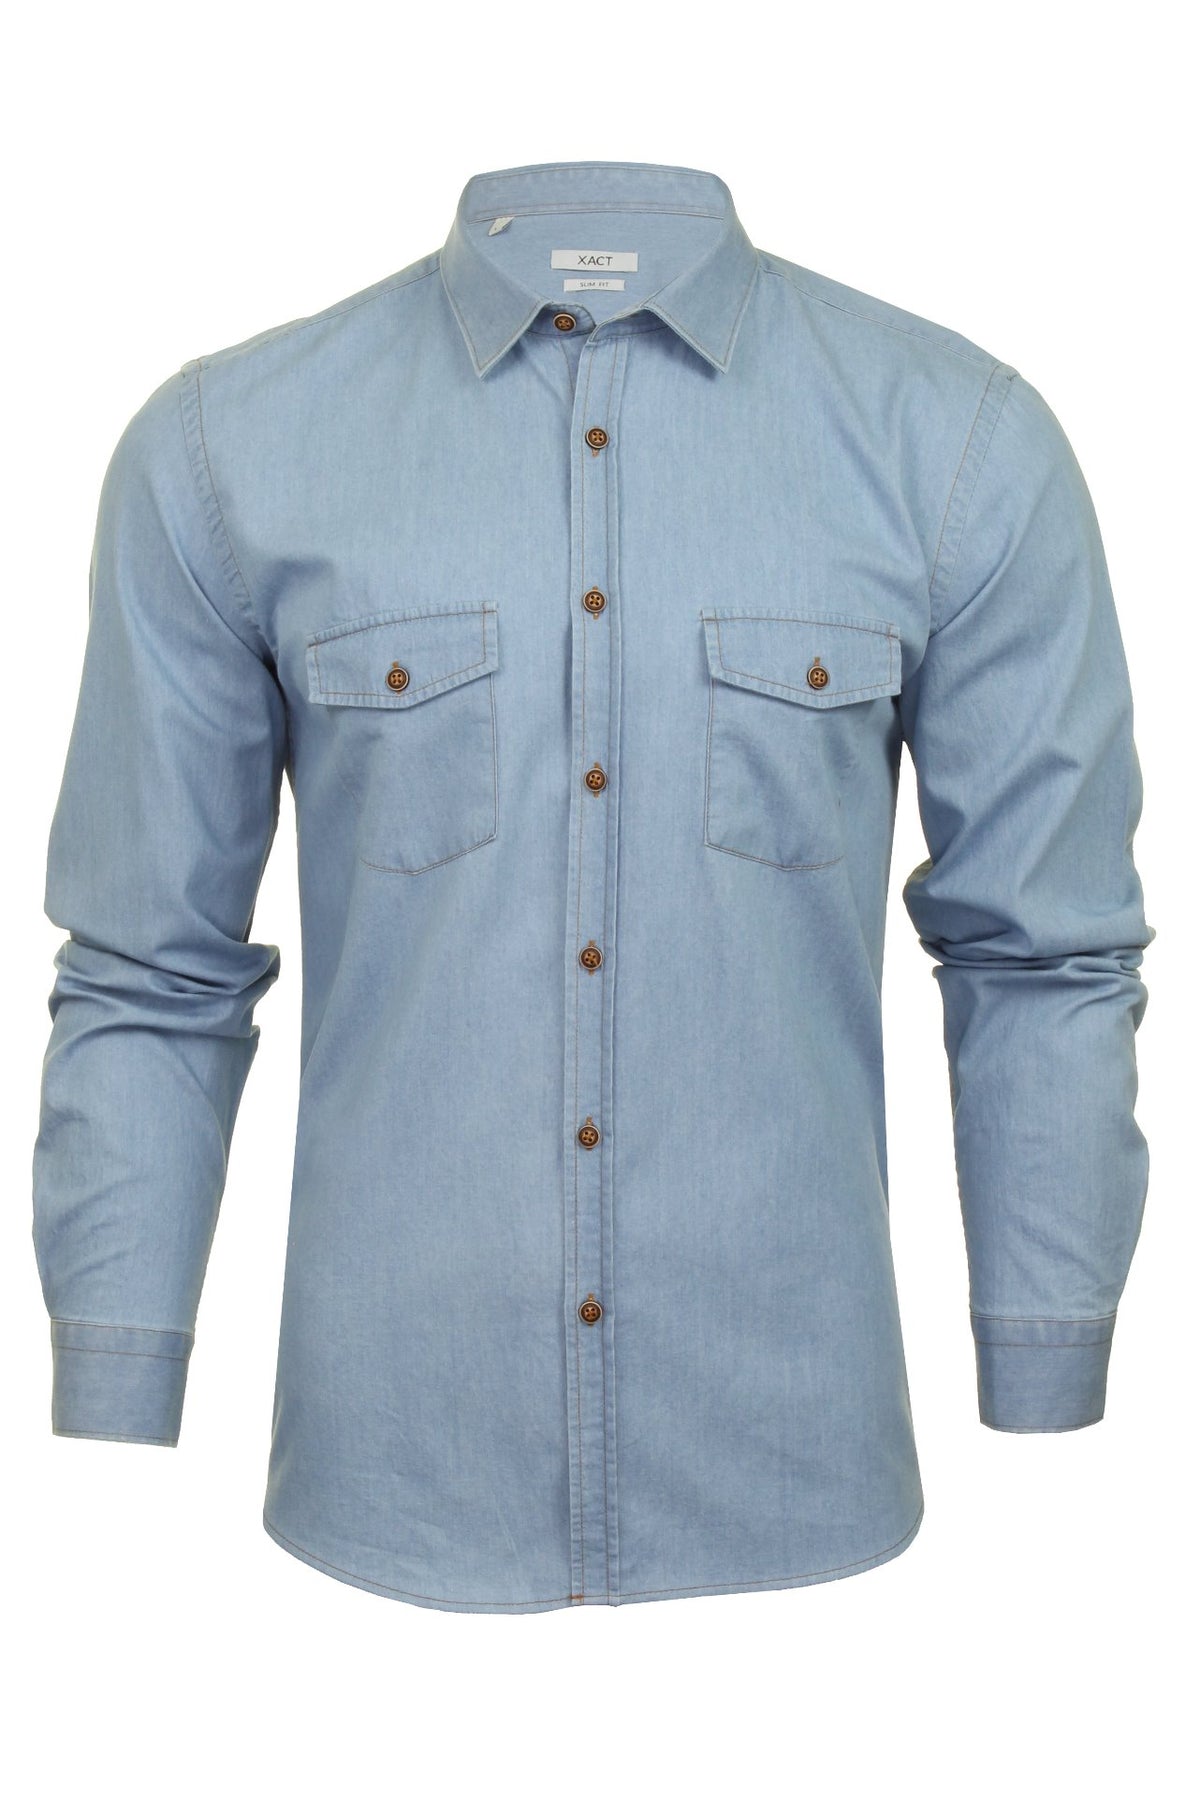 Xact Mens Long Sleeved Denim Shirt - Slim Fit, 01, Xsh1074, Blue